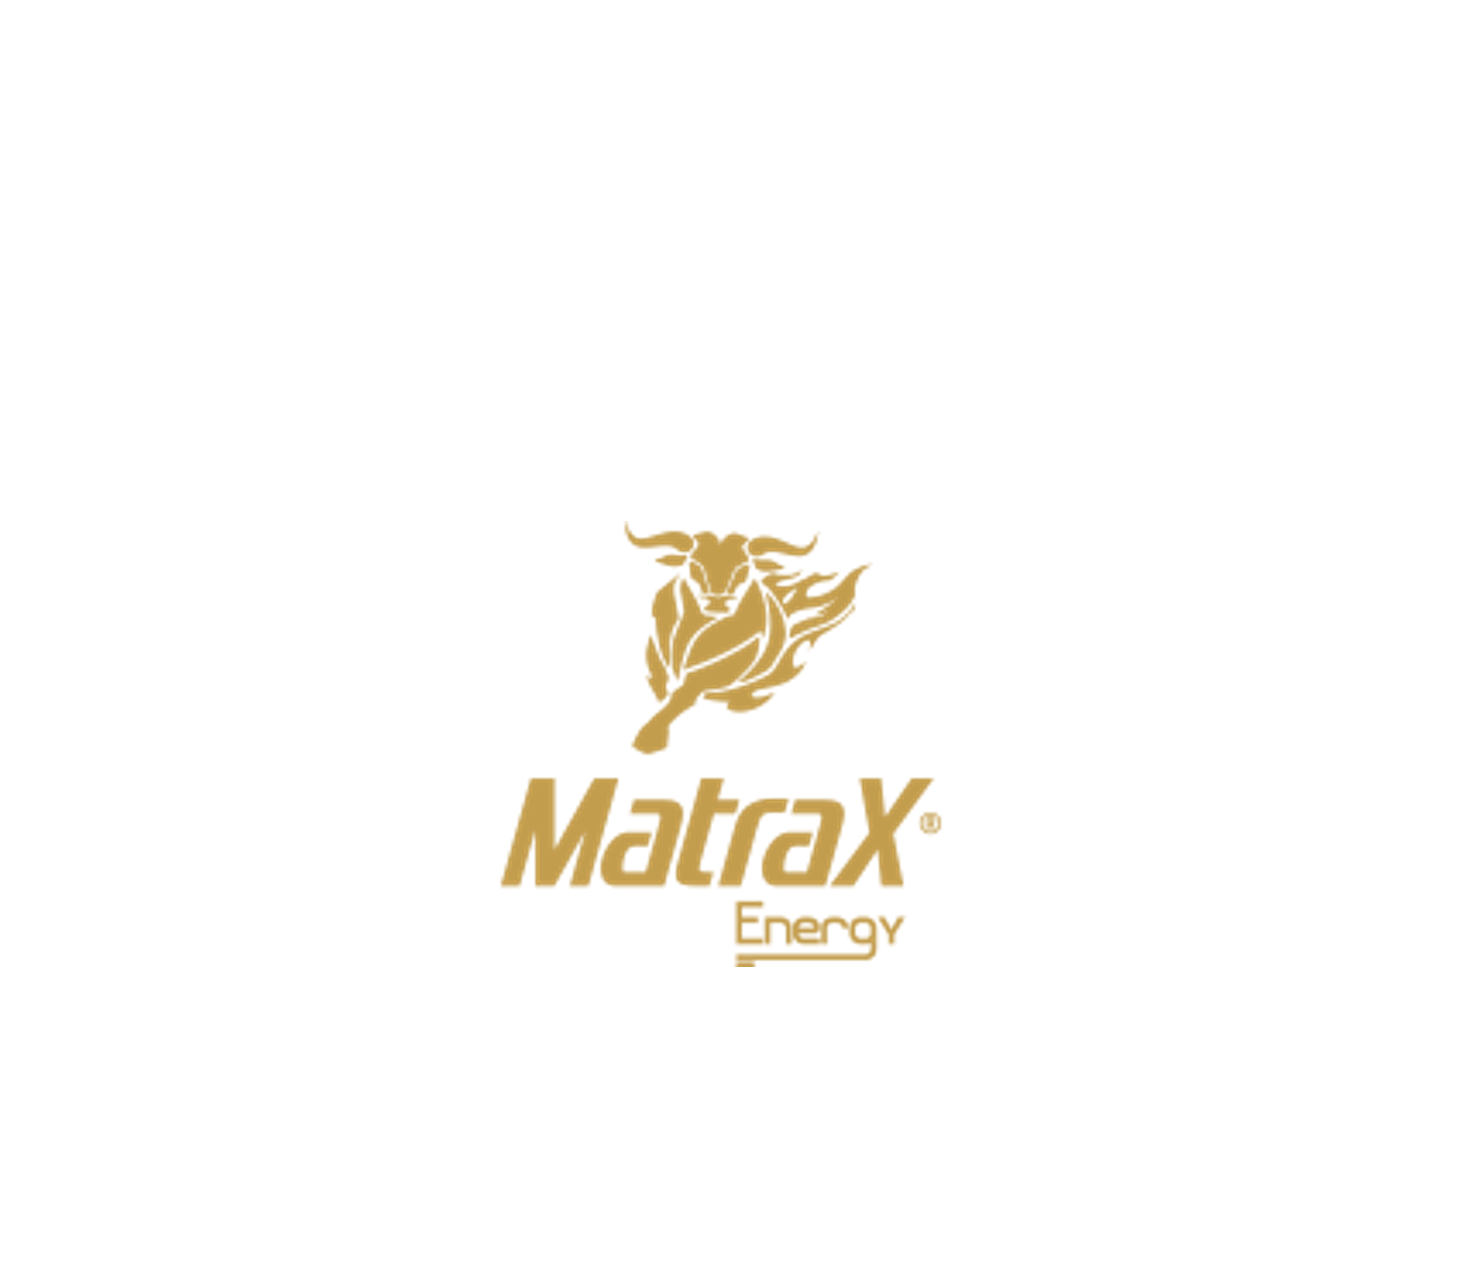 MatraX Energy